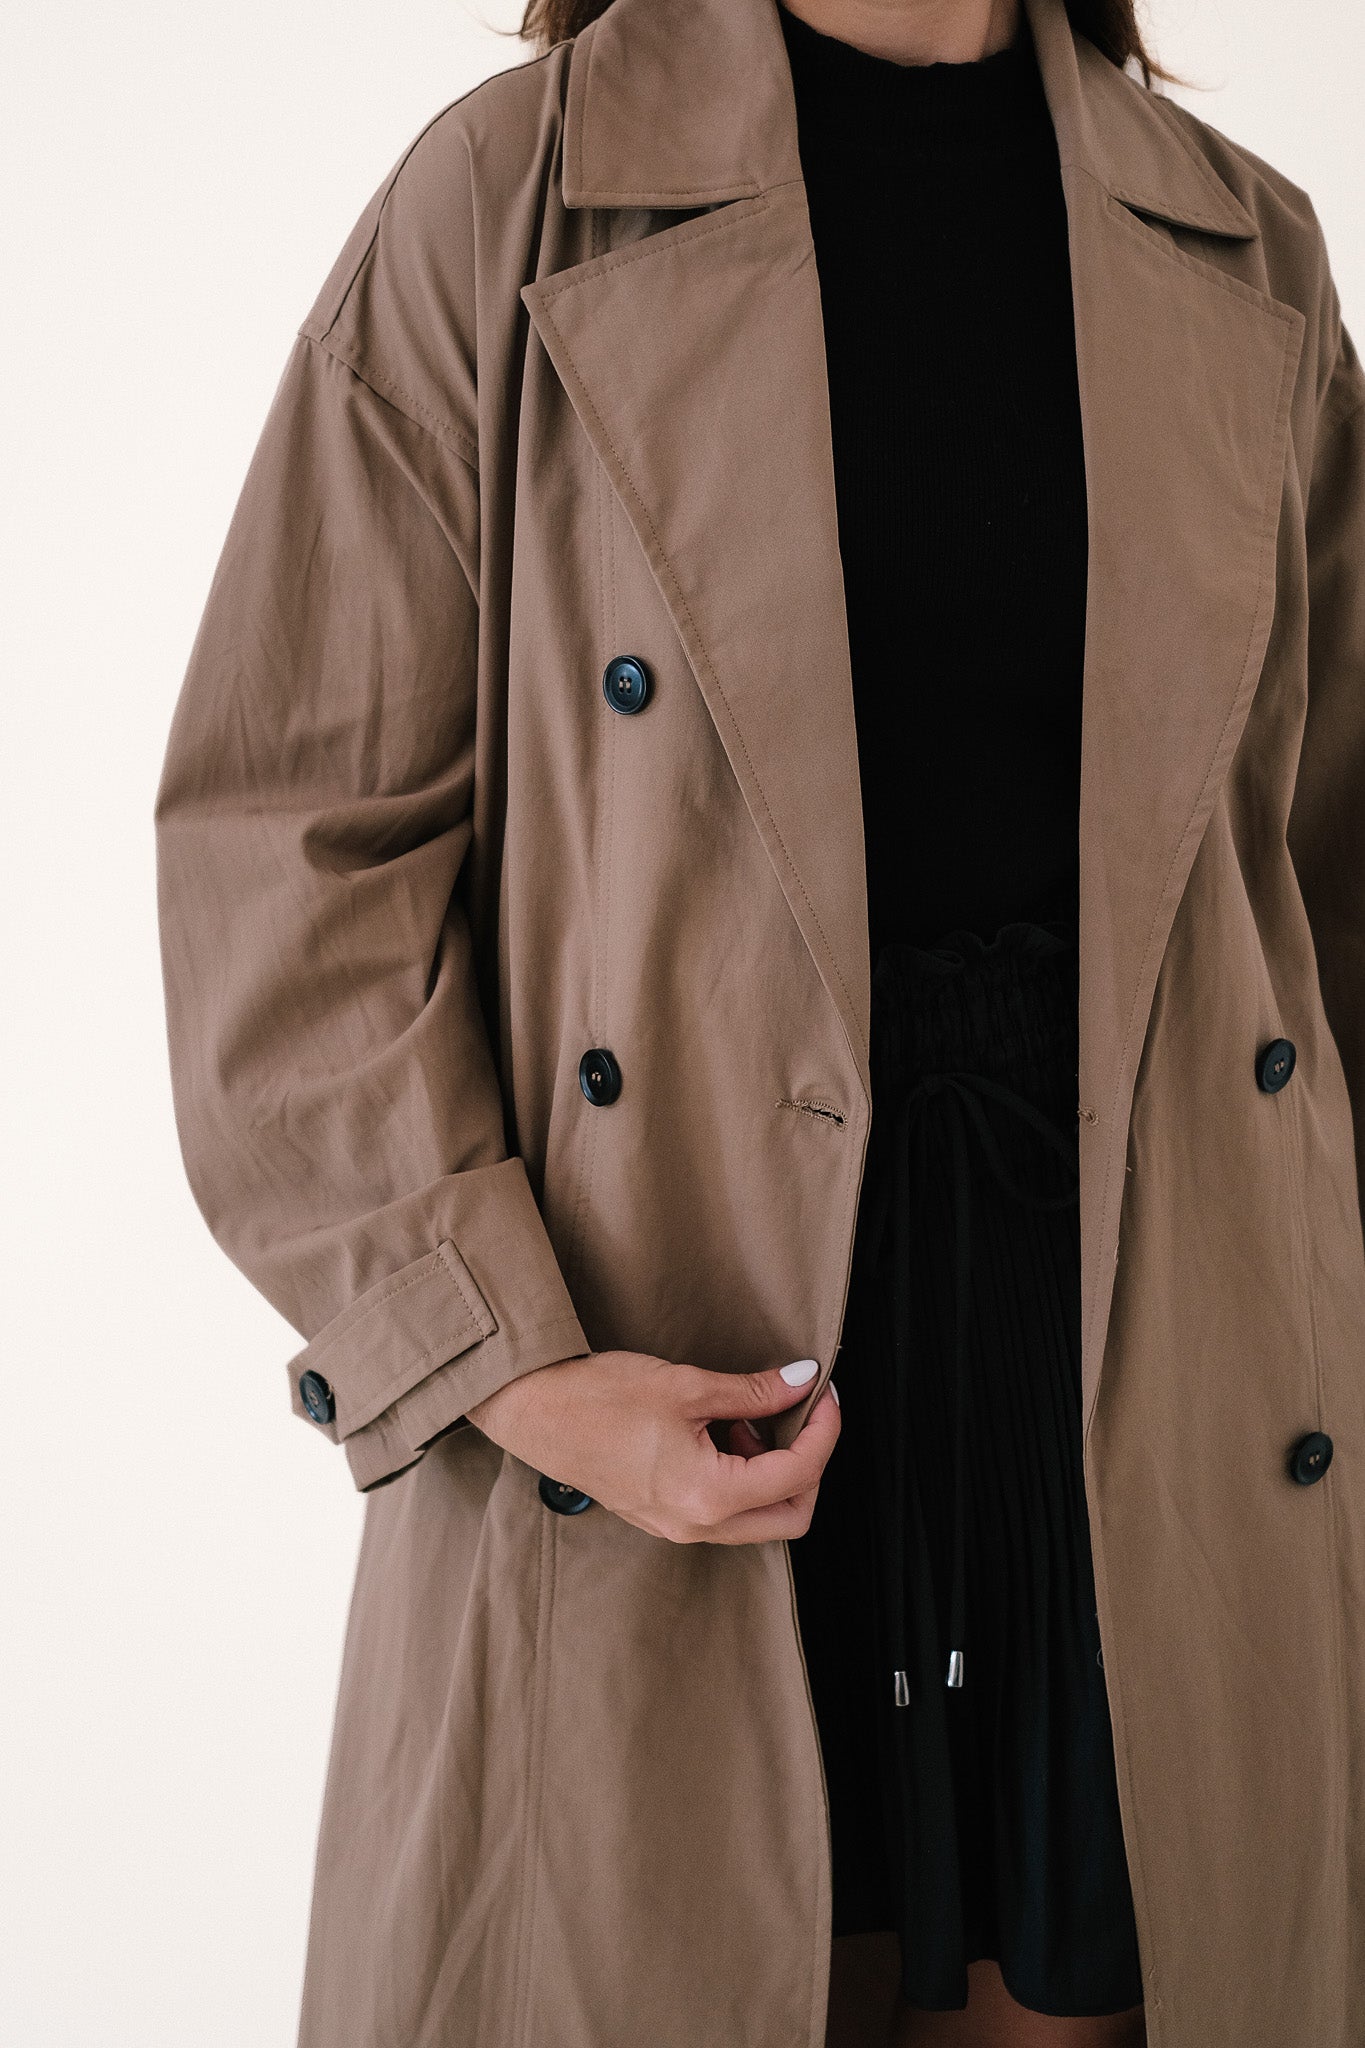 Leighton Khaki Long Sleeve Buttoned Trench Coat